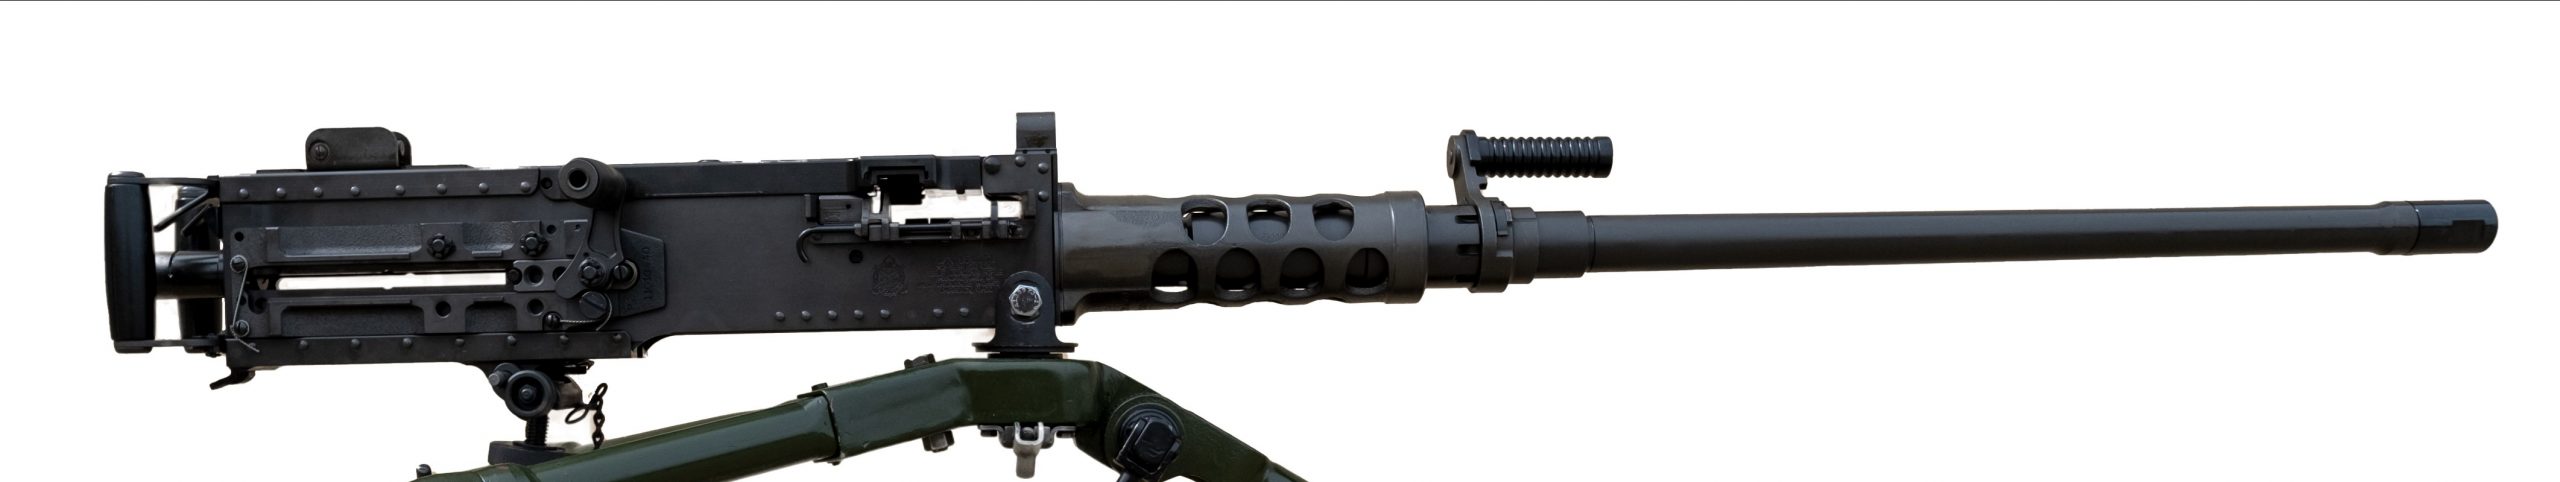 50 BMG Ma Deuce Semi Auto M2 Belt Feed rifle built by Ohio Ordnance Black Phosphate Parkerizing 200 50 BMG belt links included.